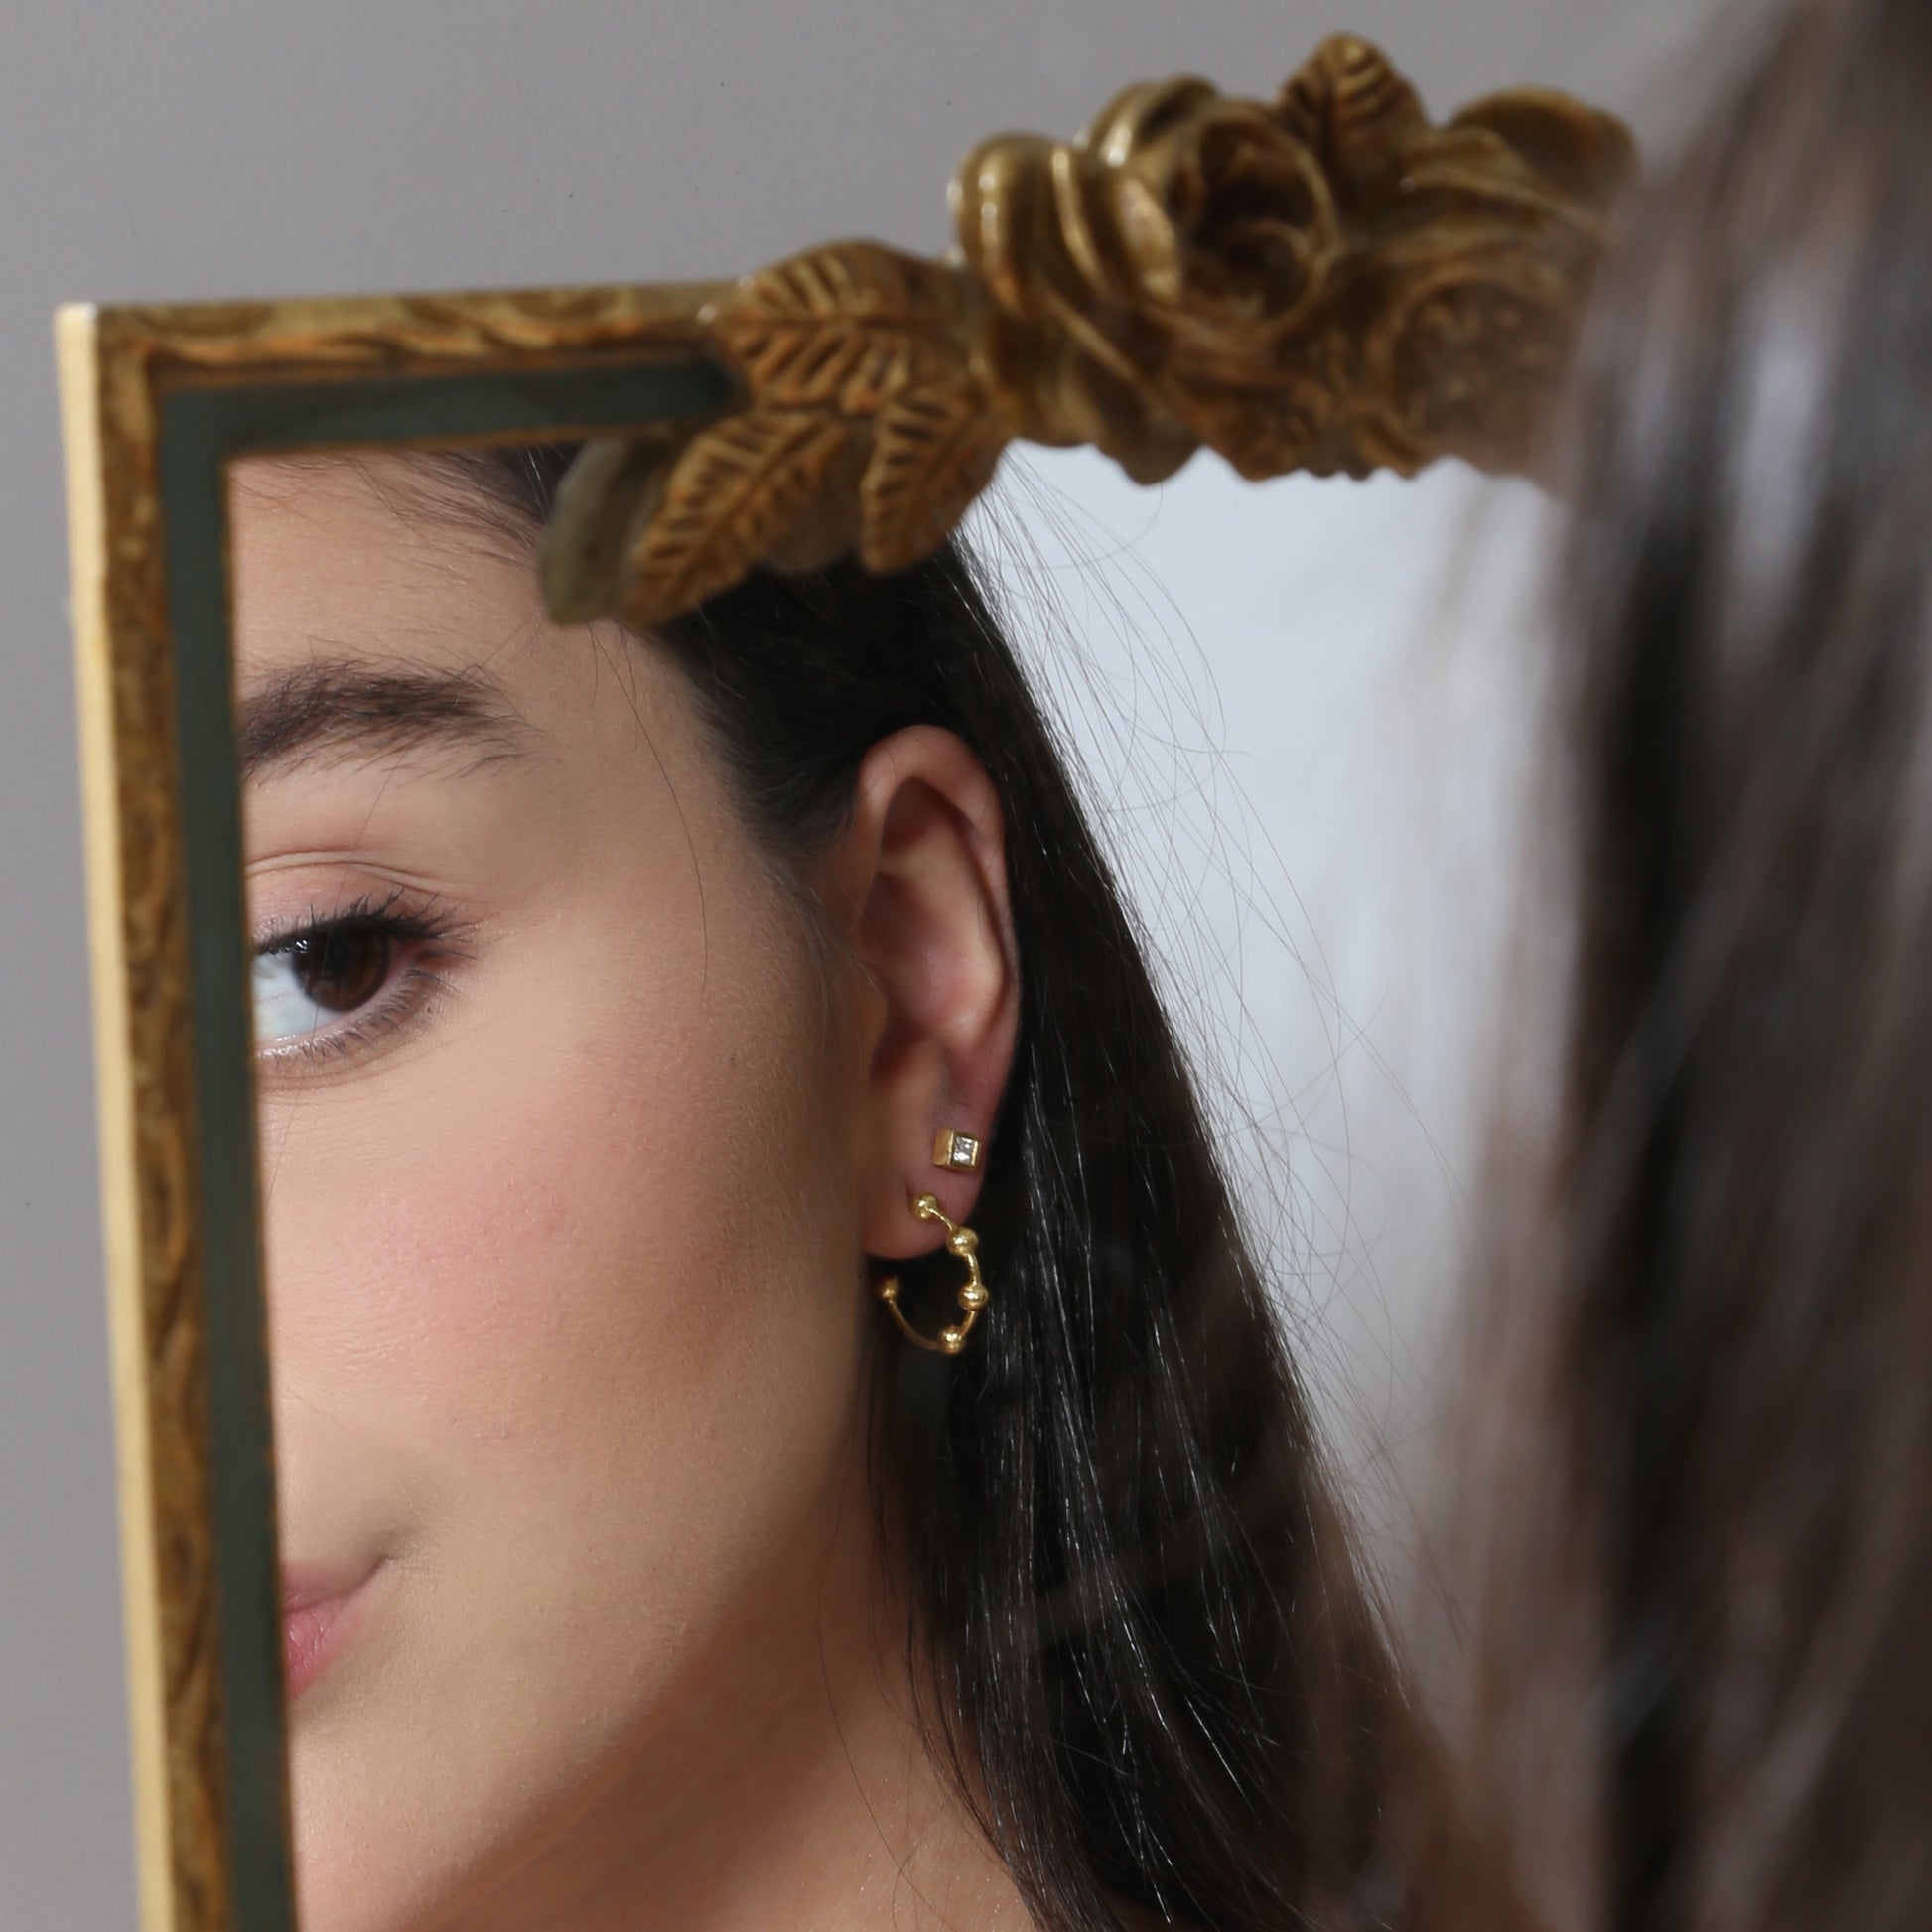 1441 h. square dimond earrings - pair